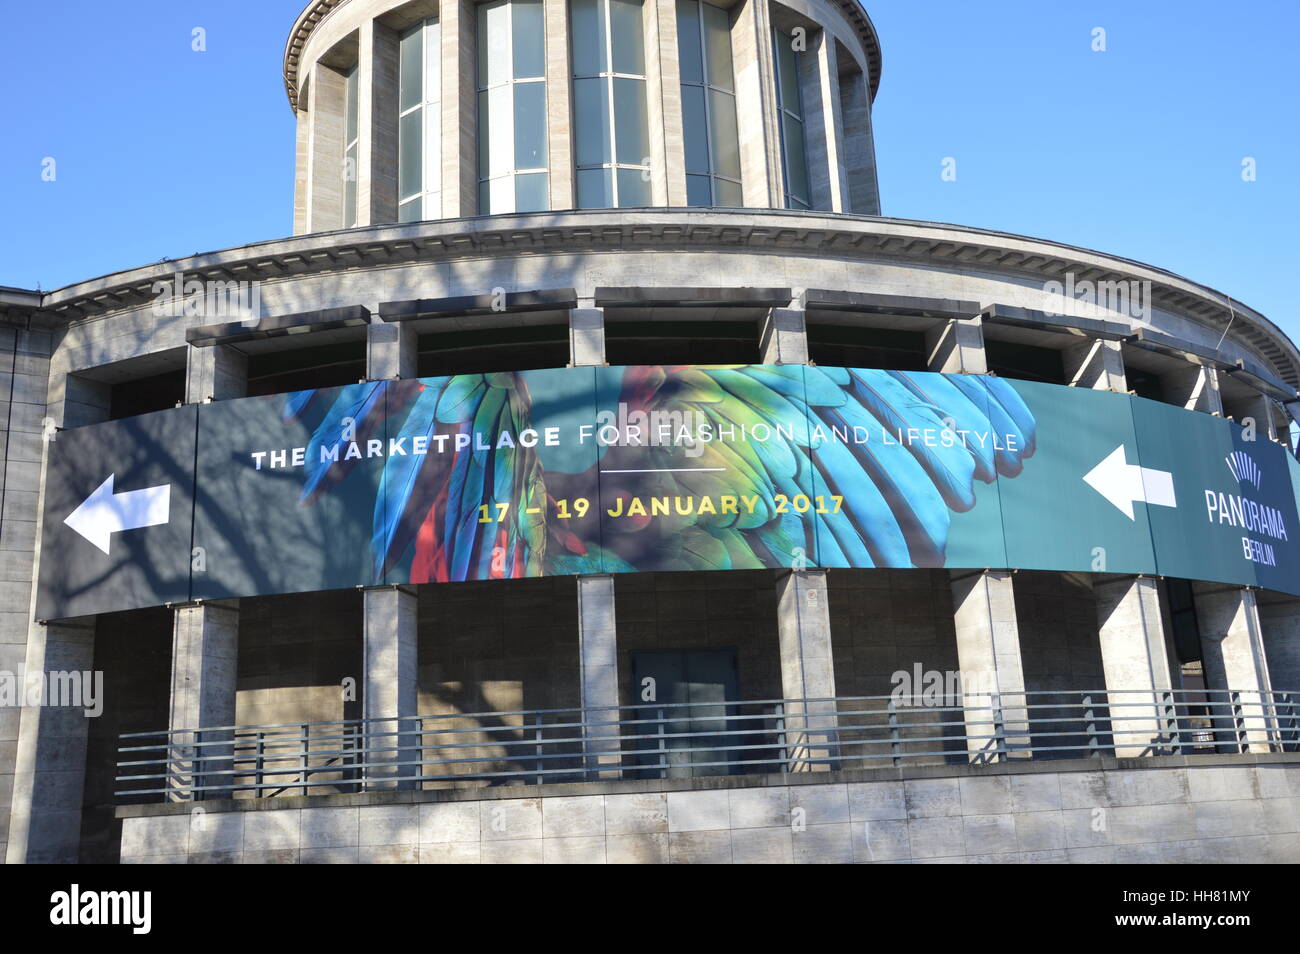 Berlin, Deutschland. 17. Januar 2017. Panorama Berlin 2017 Modemesse in Berlin Kredit im Gange: Markku Rainer Peltonen/Alamy Live News Stockfoto